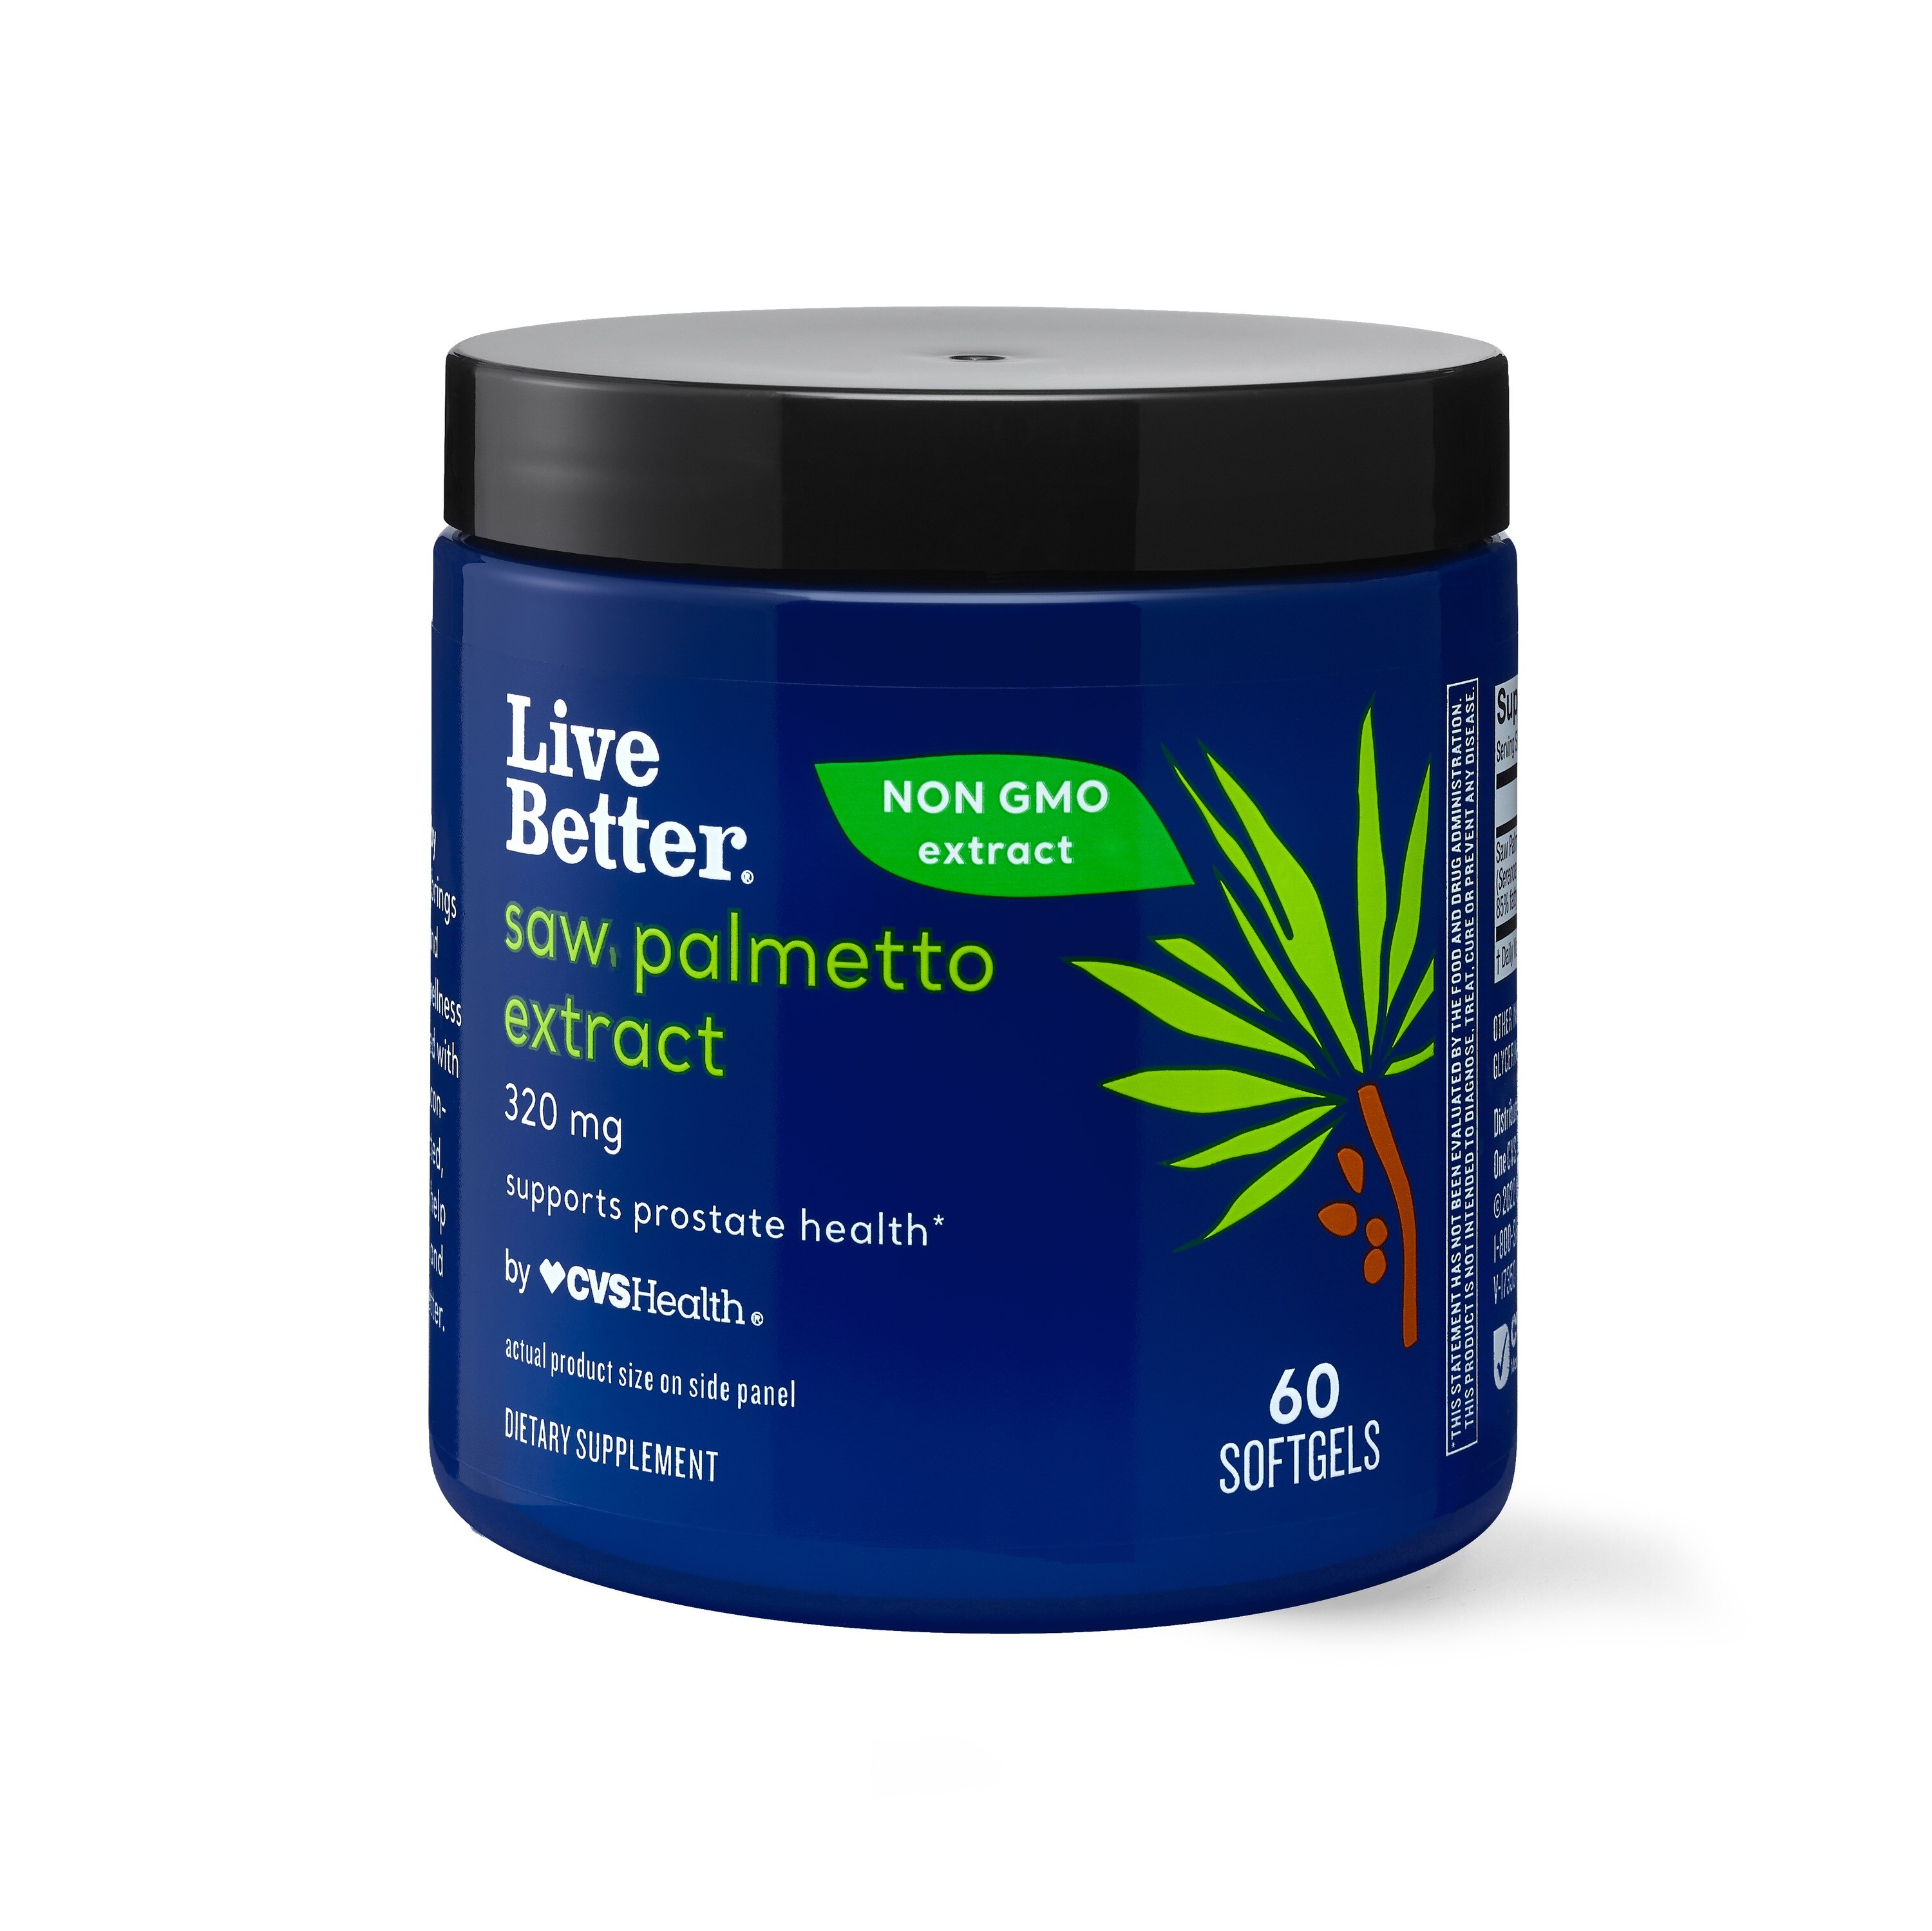 Live Better - Extracto de Saw Palmetto, 320 mg, 60 u.